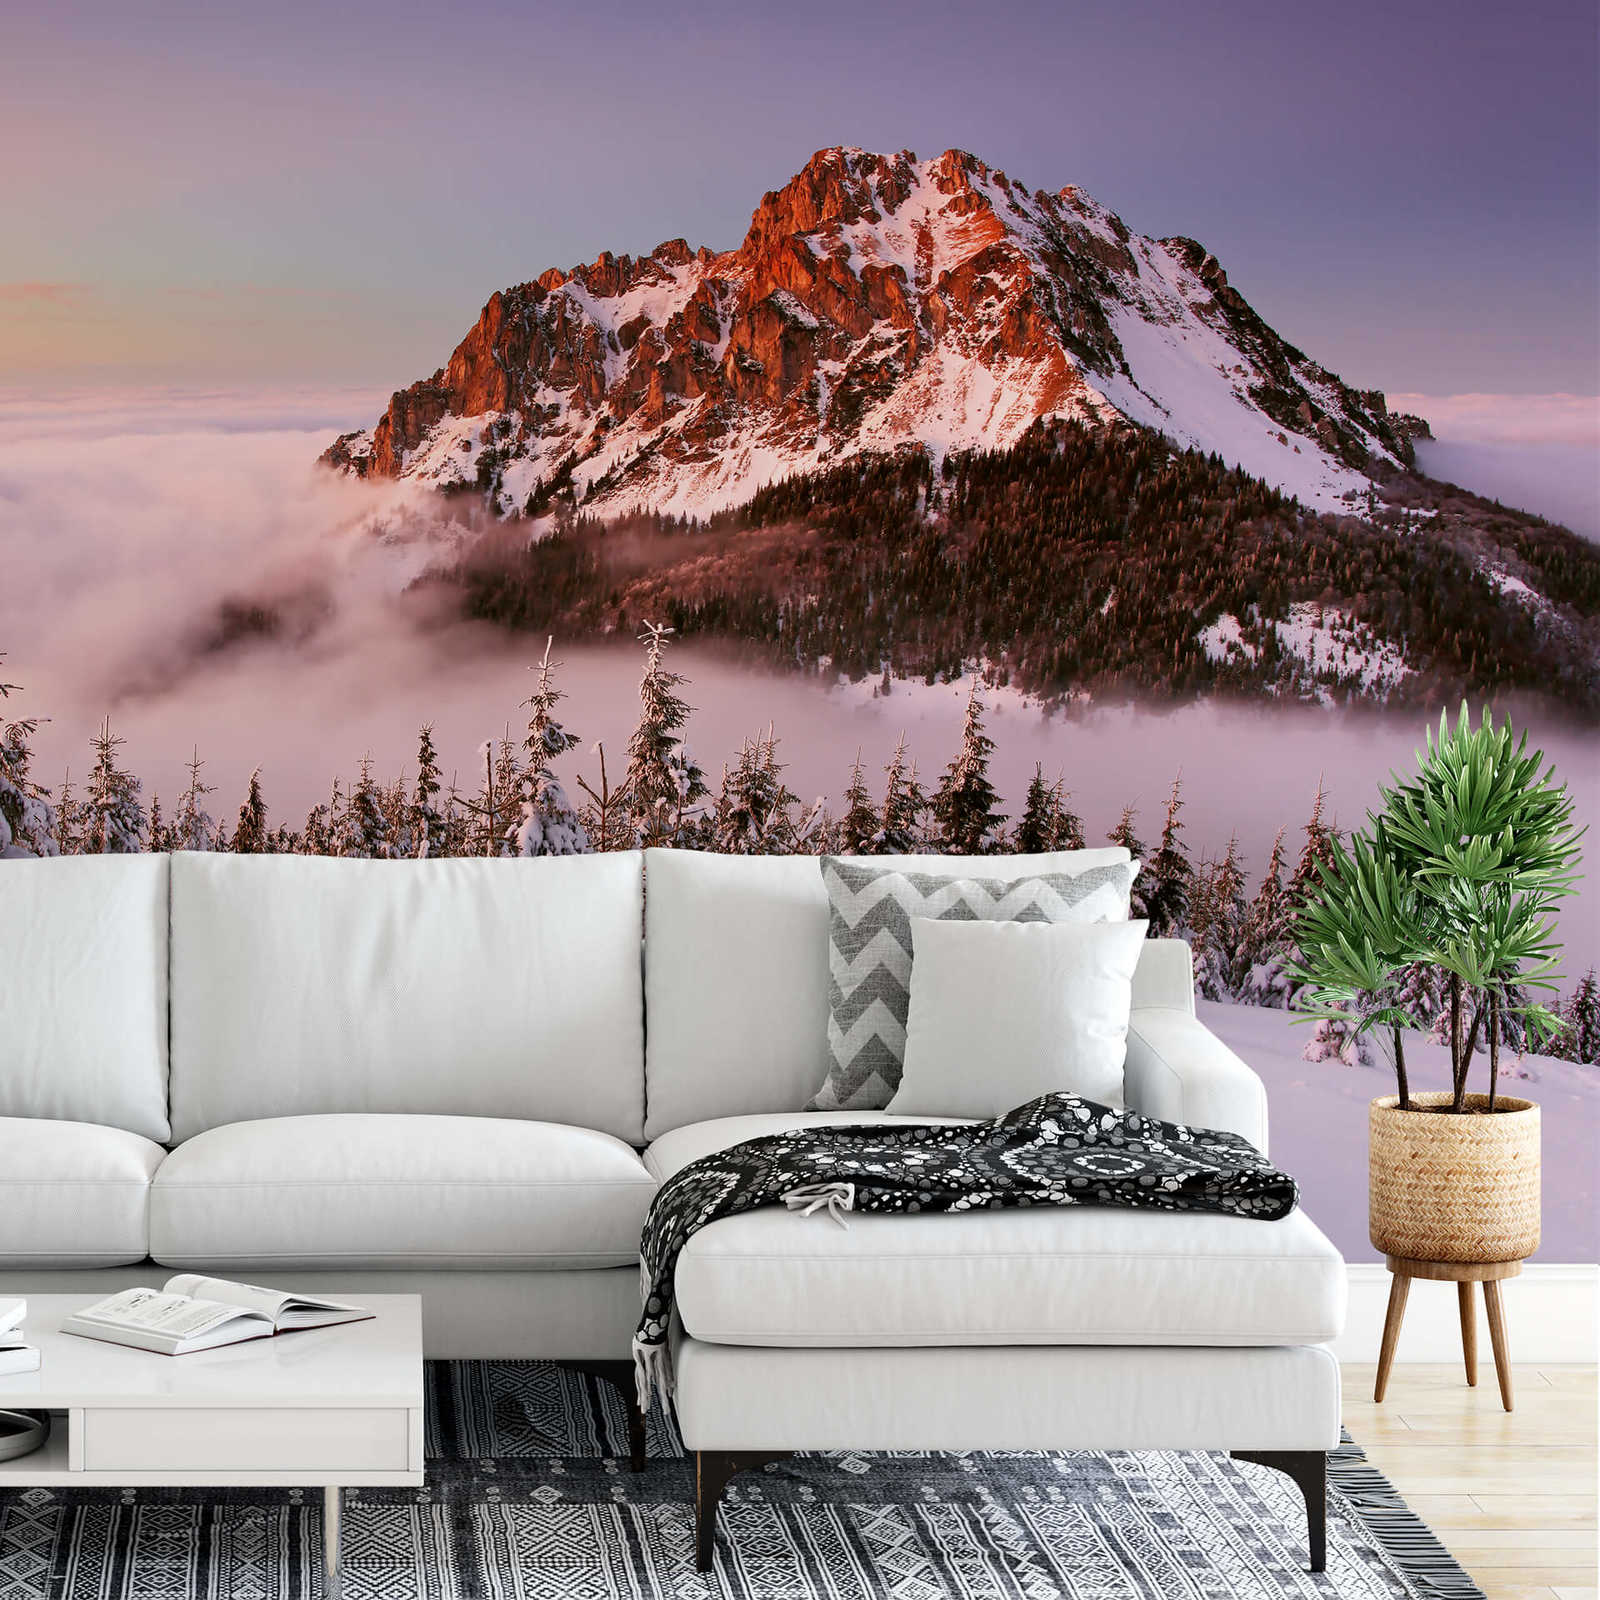             Photo wallpaper mountain top with snow - white, brown, green
        